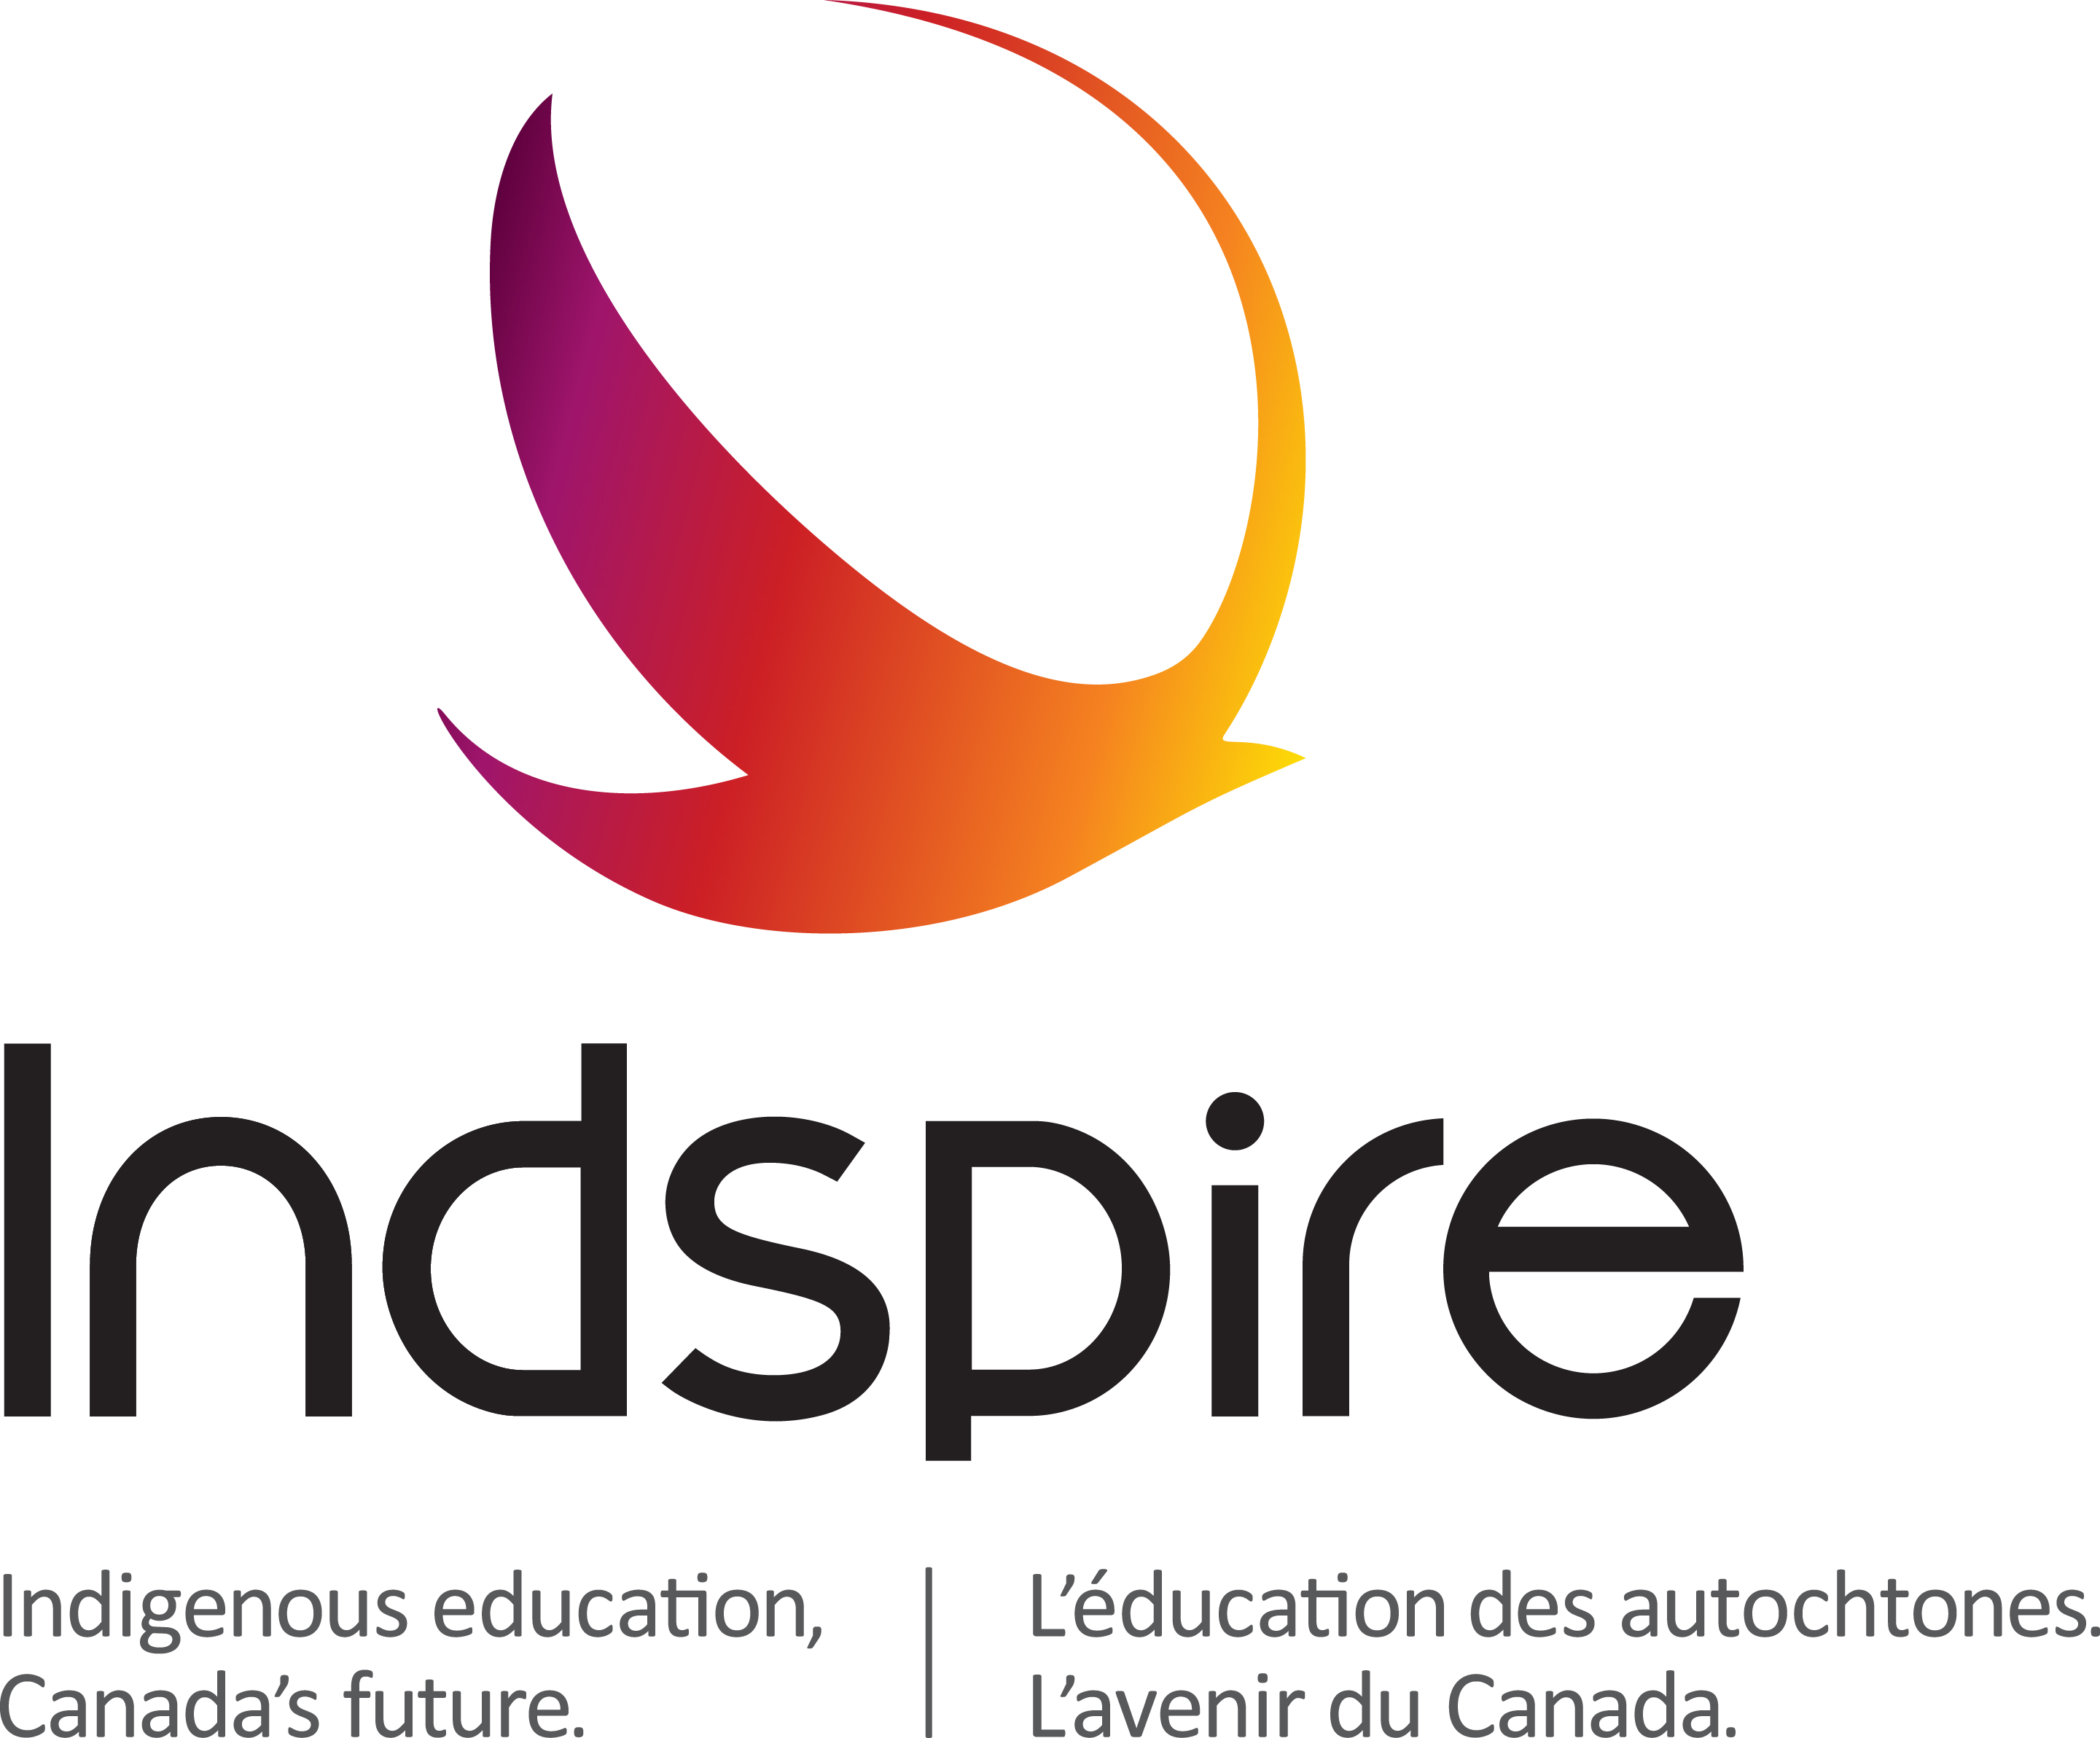 30th Anniversary of Indspire Awards celebrates three decades of Indigenous achievement